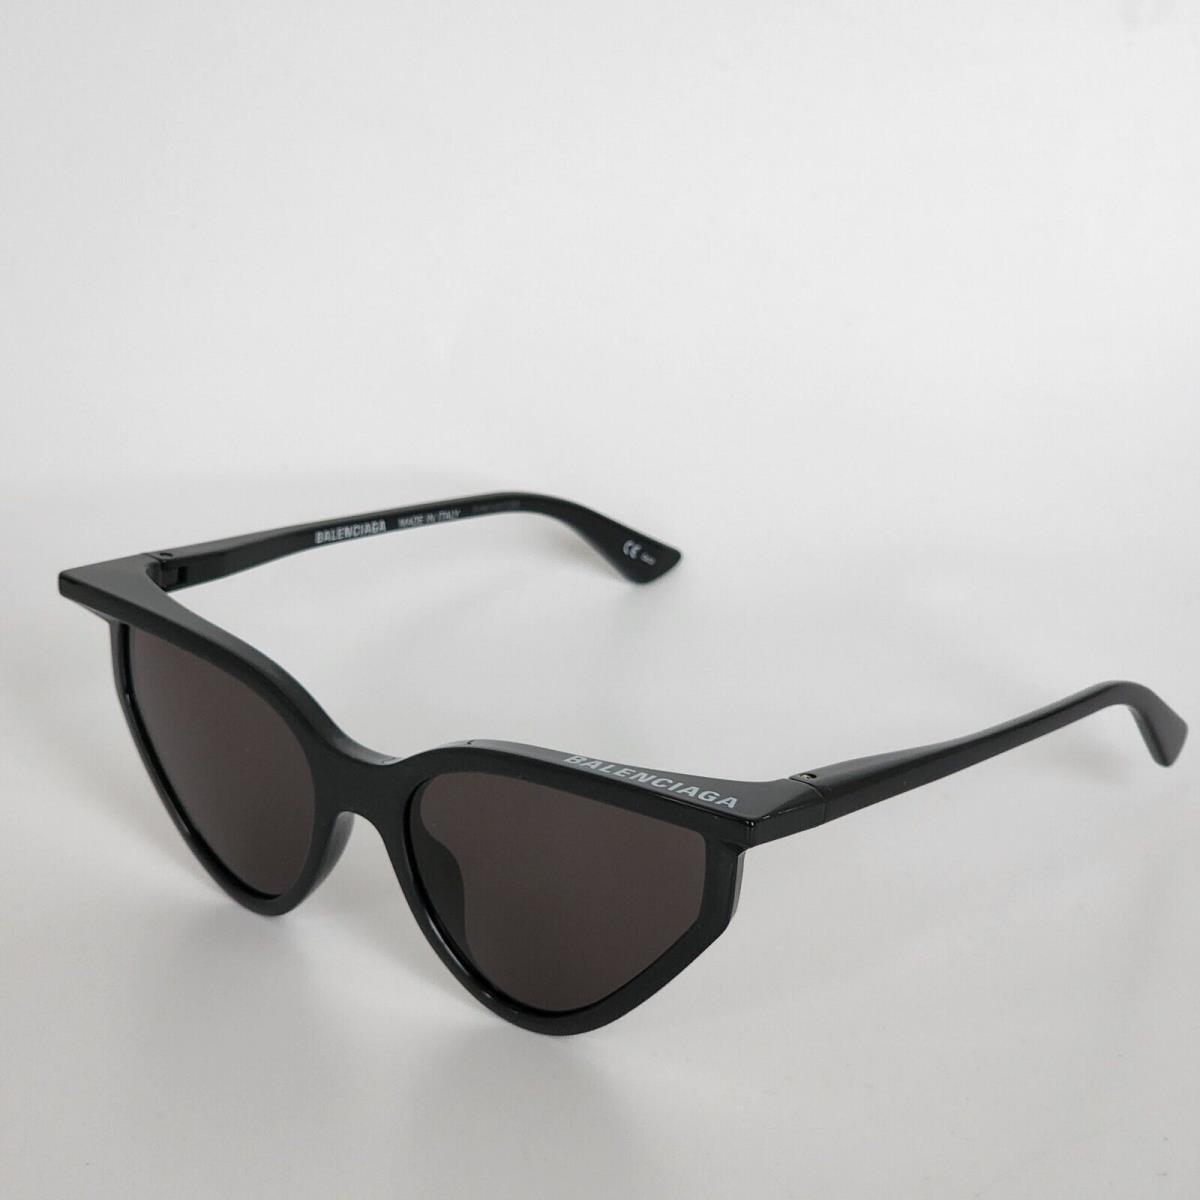 Balenciaga sunglasses  - Black Frame, Gray Lens 6